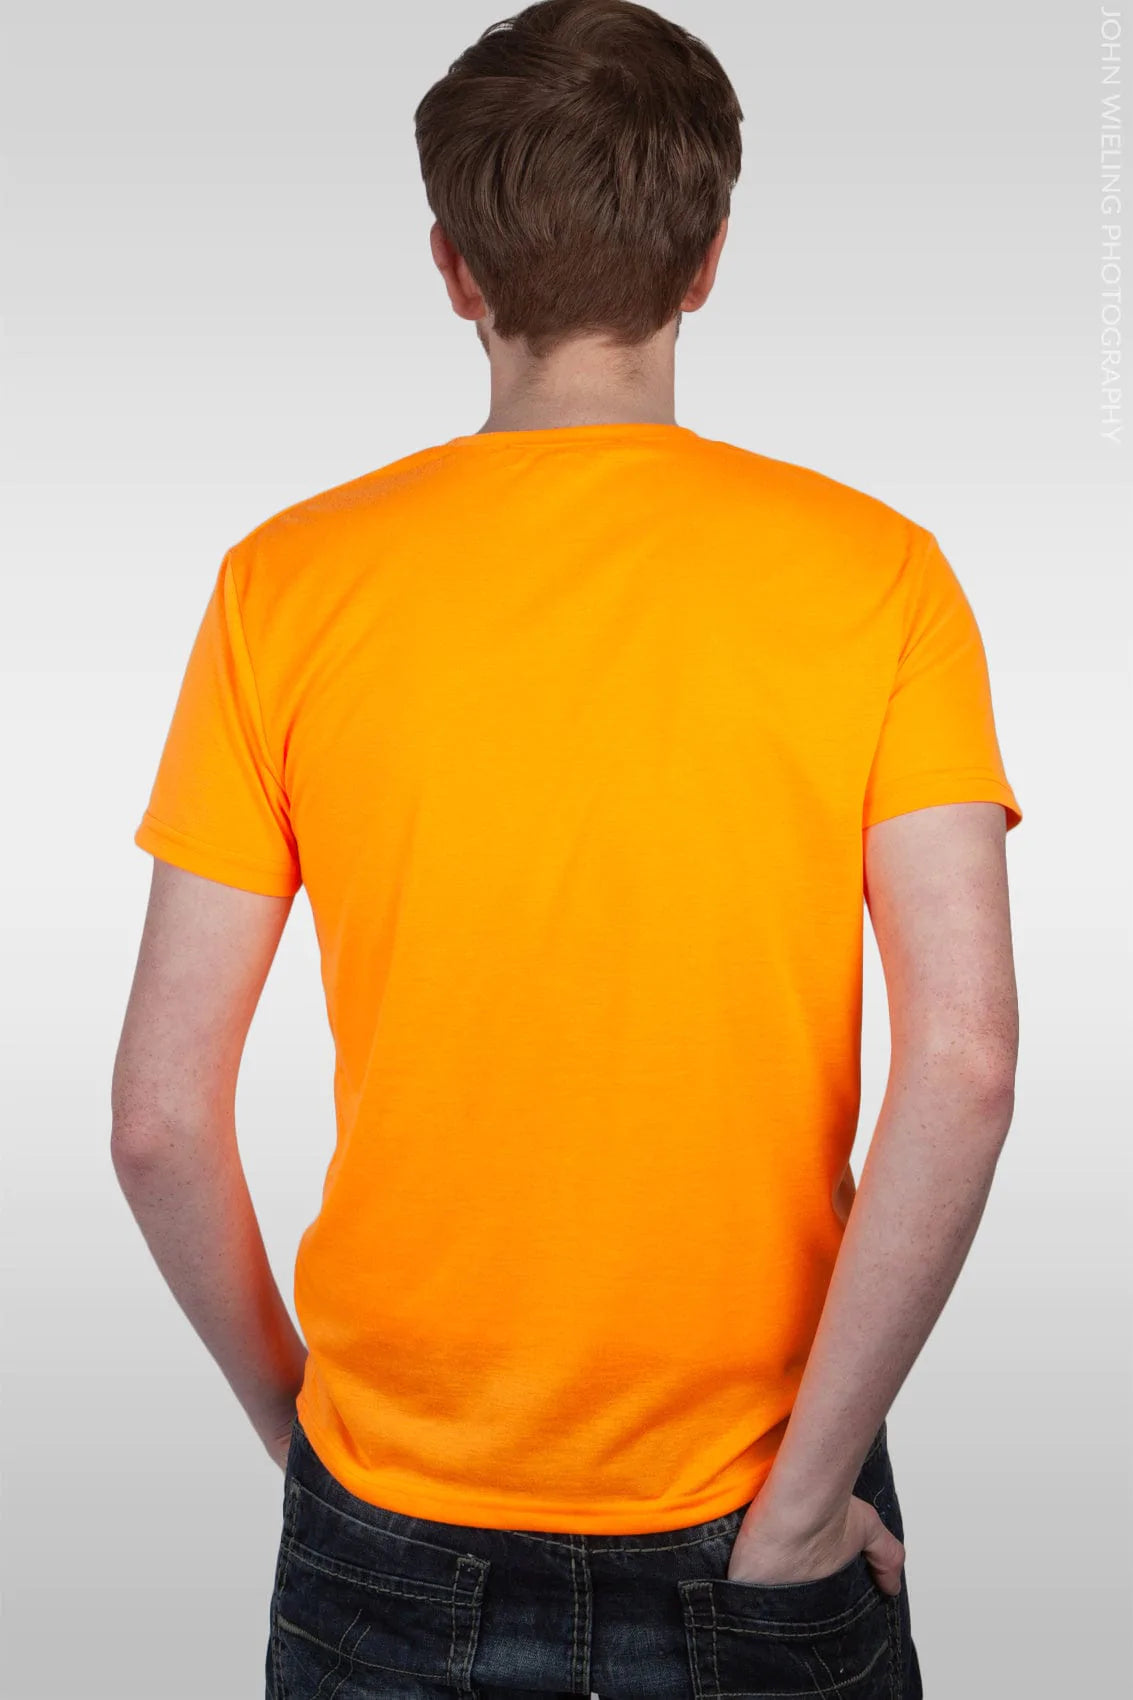 Top Gun T-shirt "Shining" neon orange